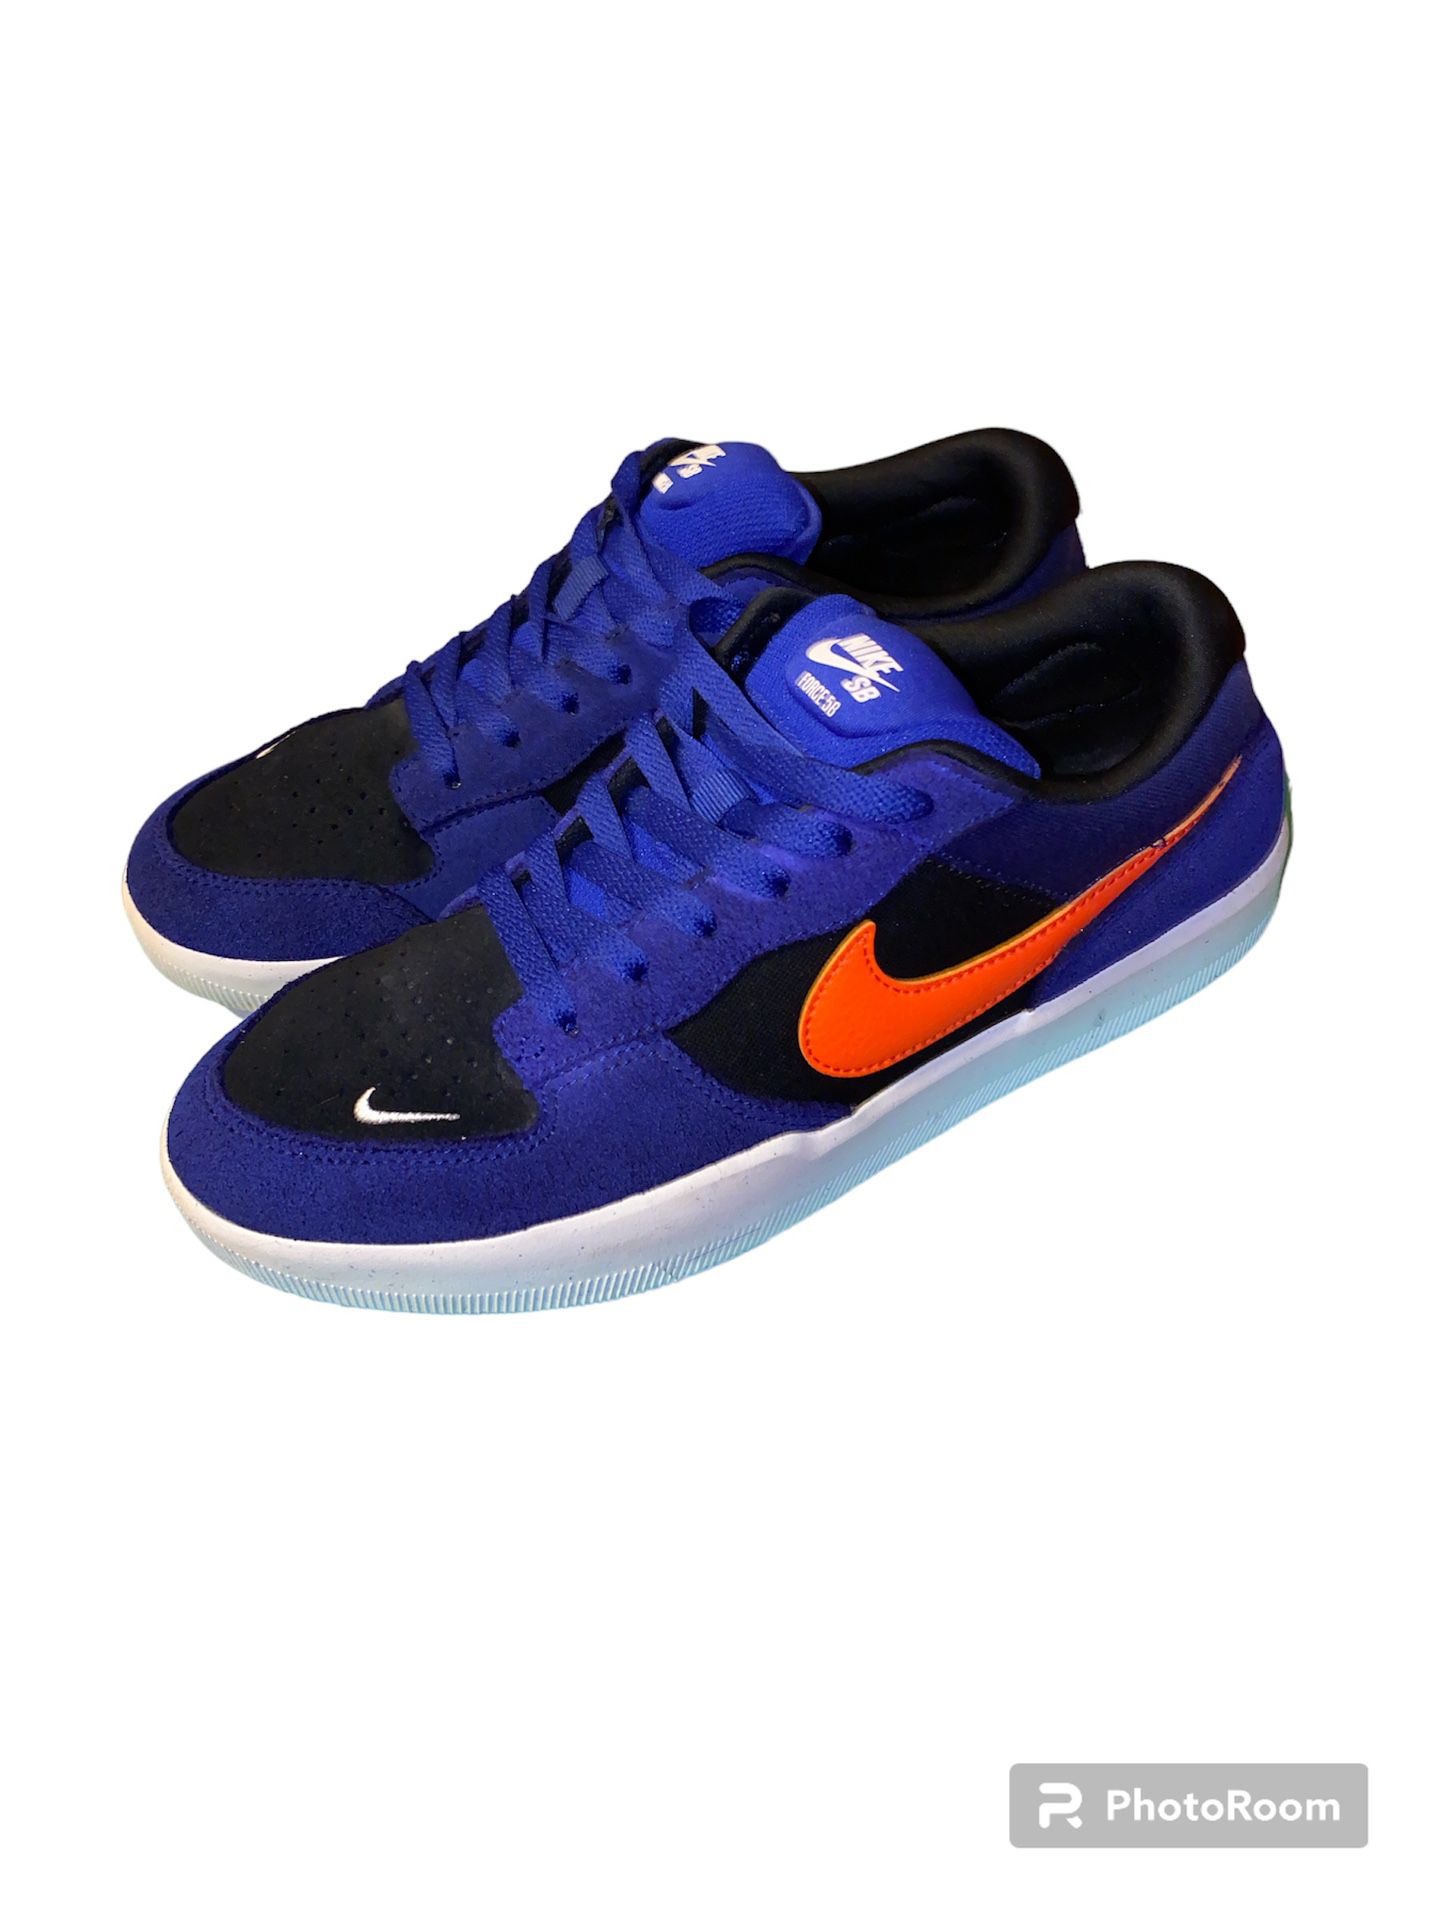 Nike SB Force 58 Concord, Orange & Black Skate Shoes